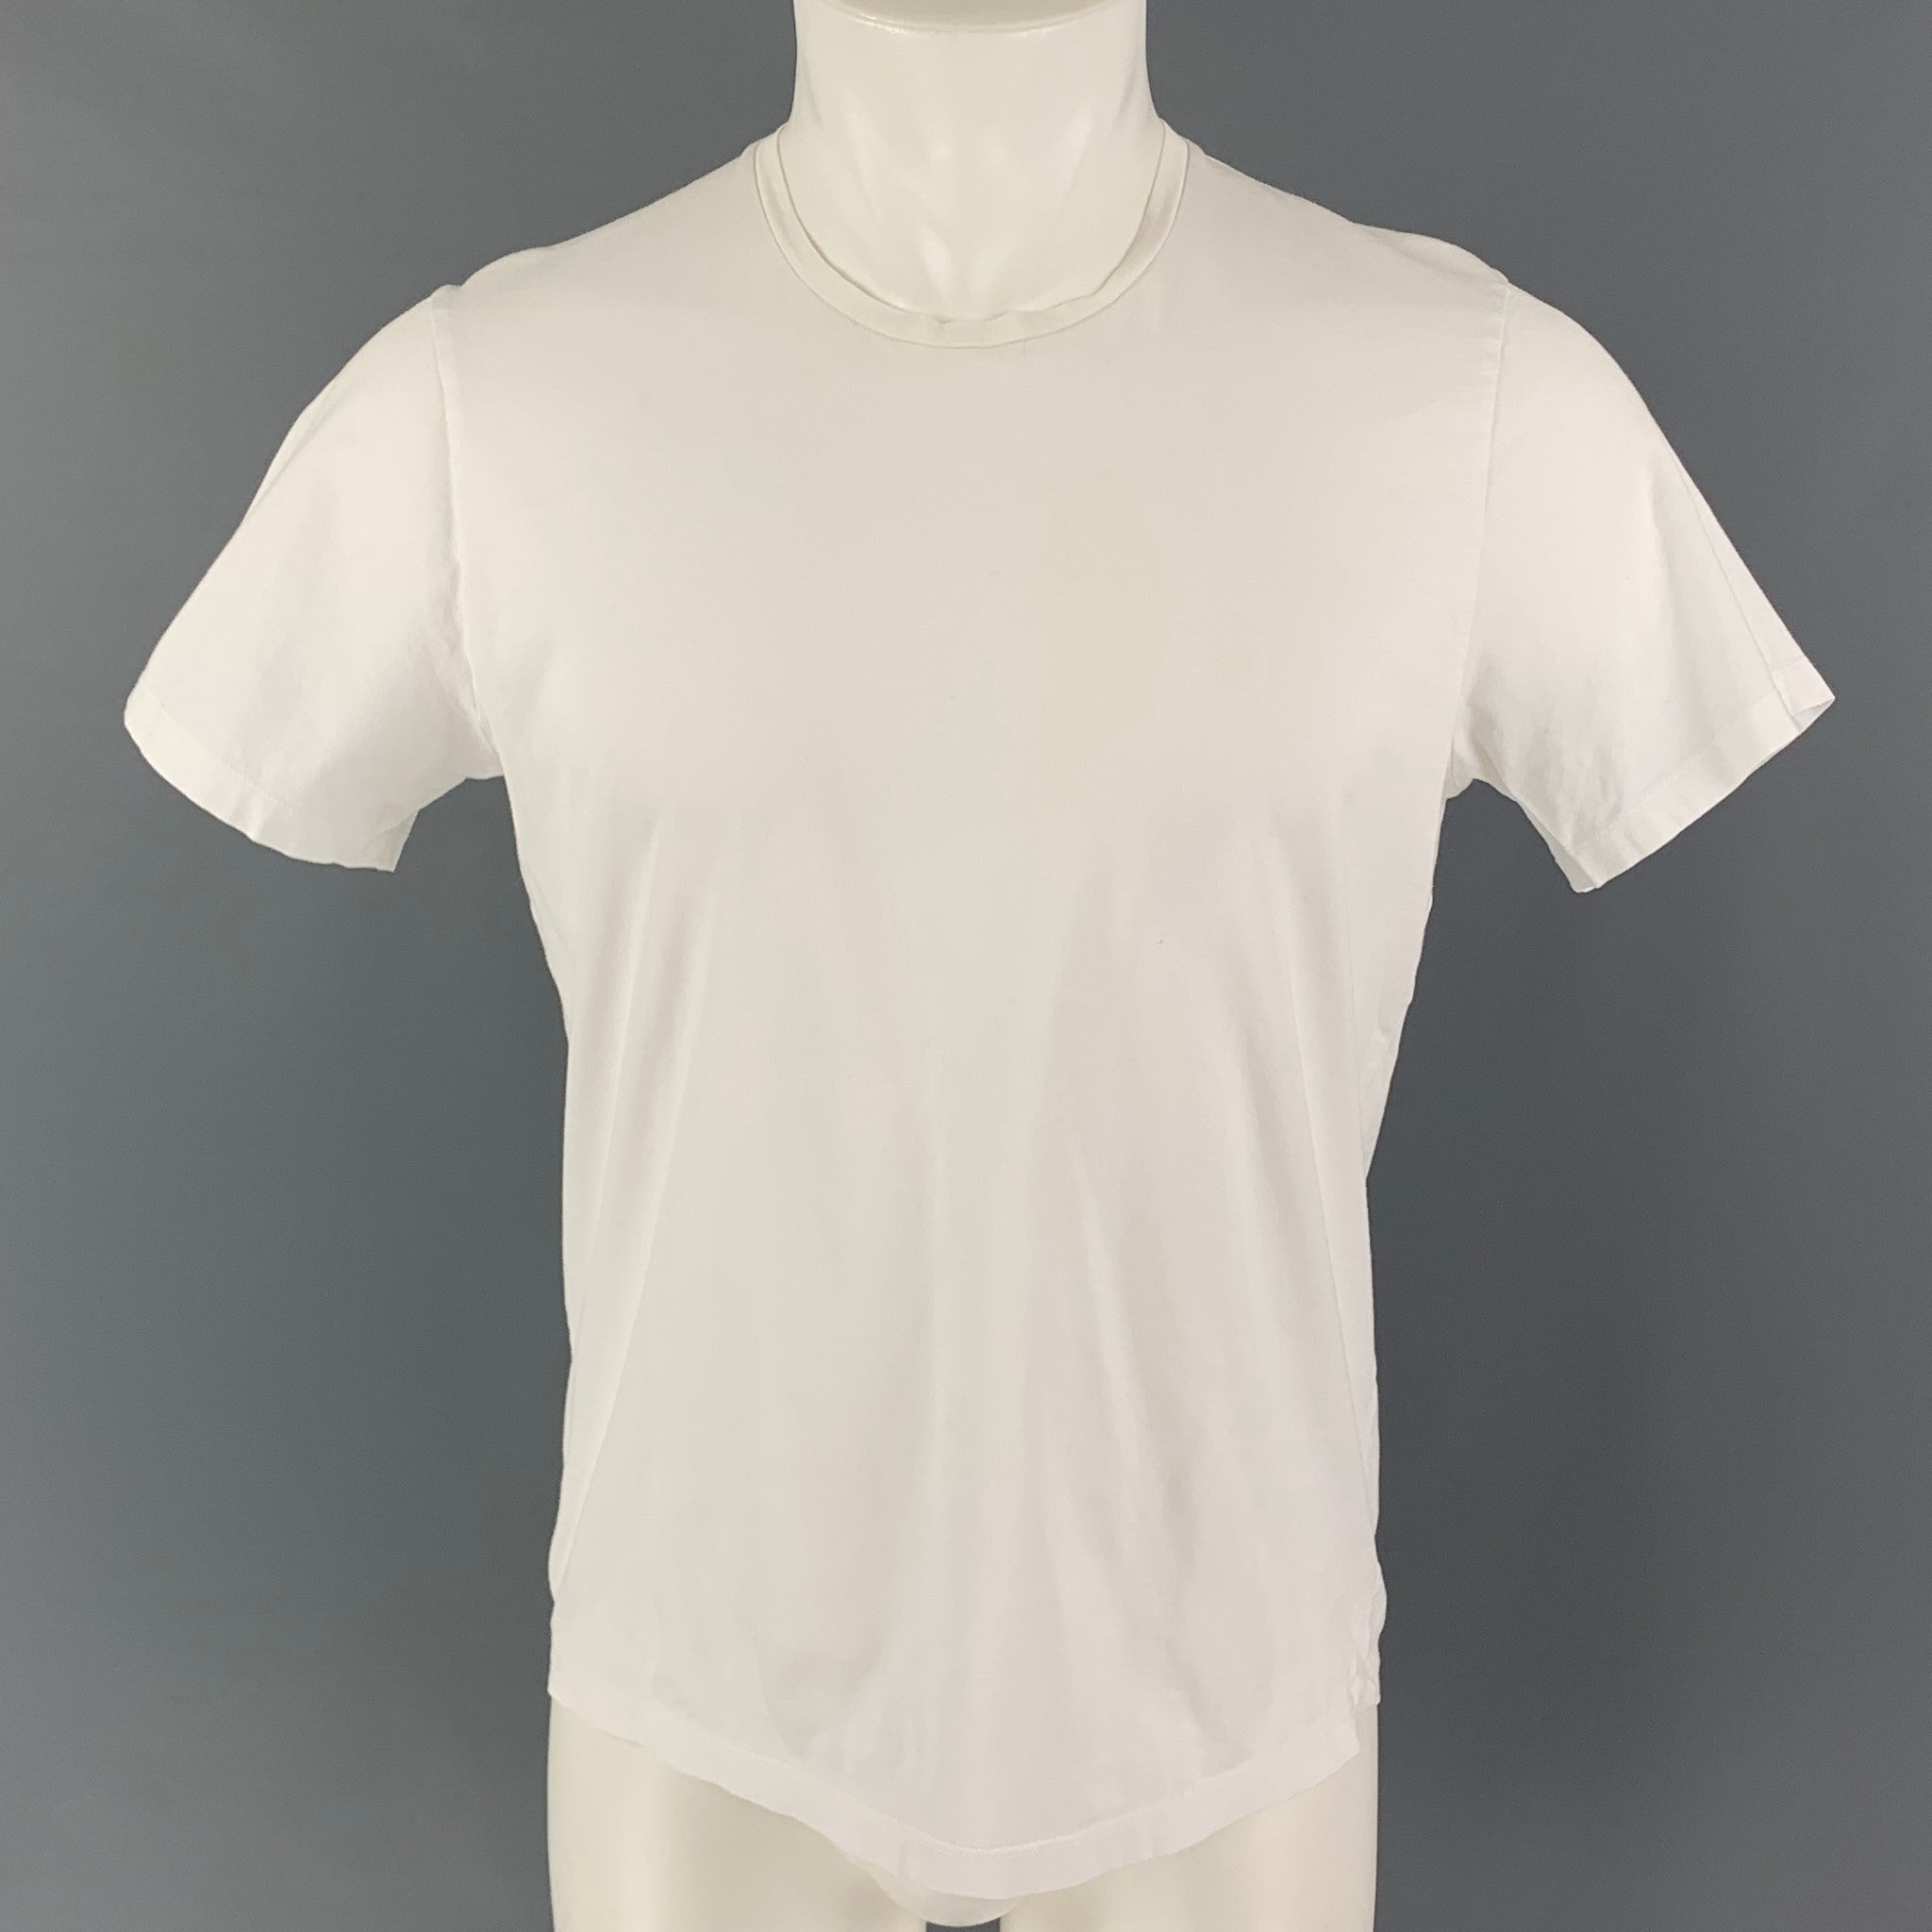 Louis Vuitton - Authenticated Polo Shirt - Cotton White Plain for Men, Very Good Condition